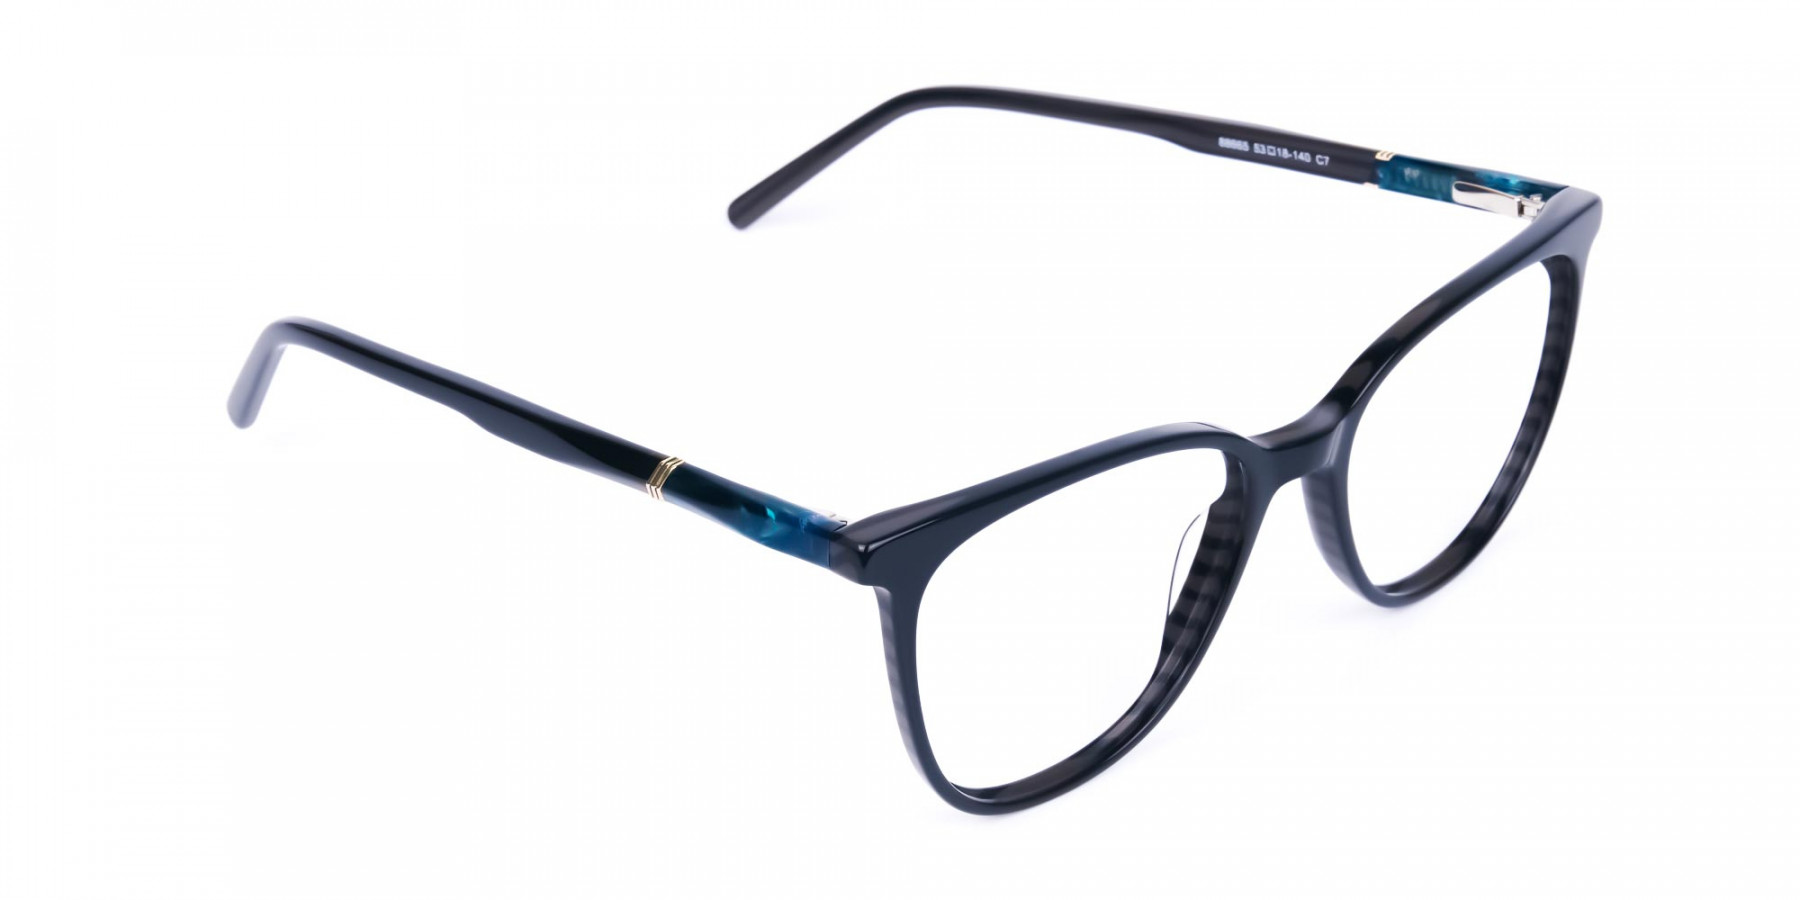 teal cat eye glasses - 1